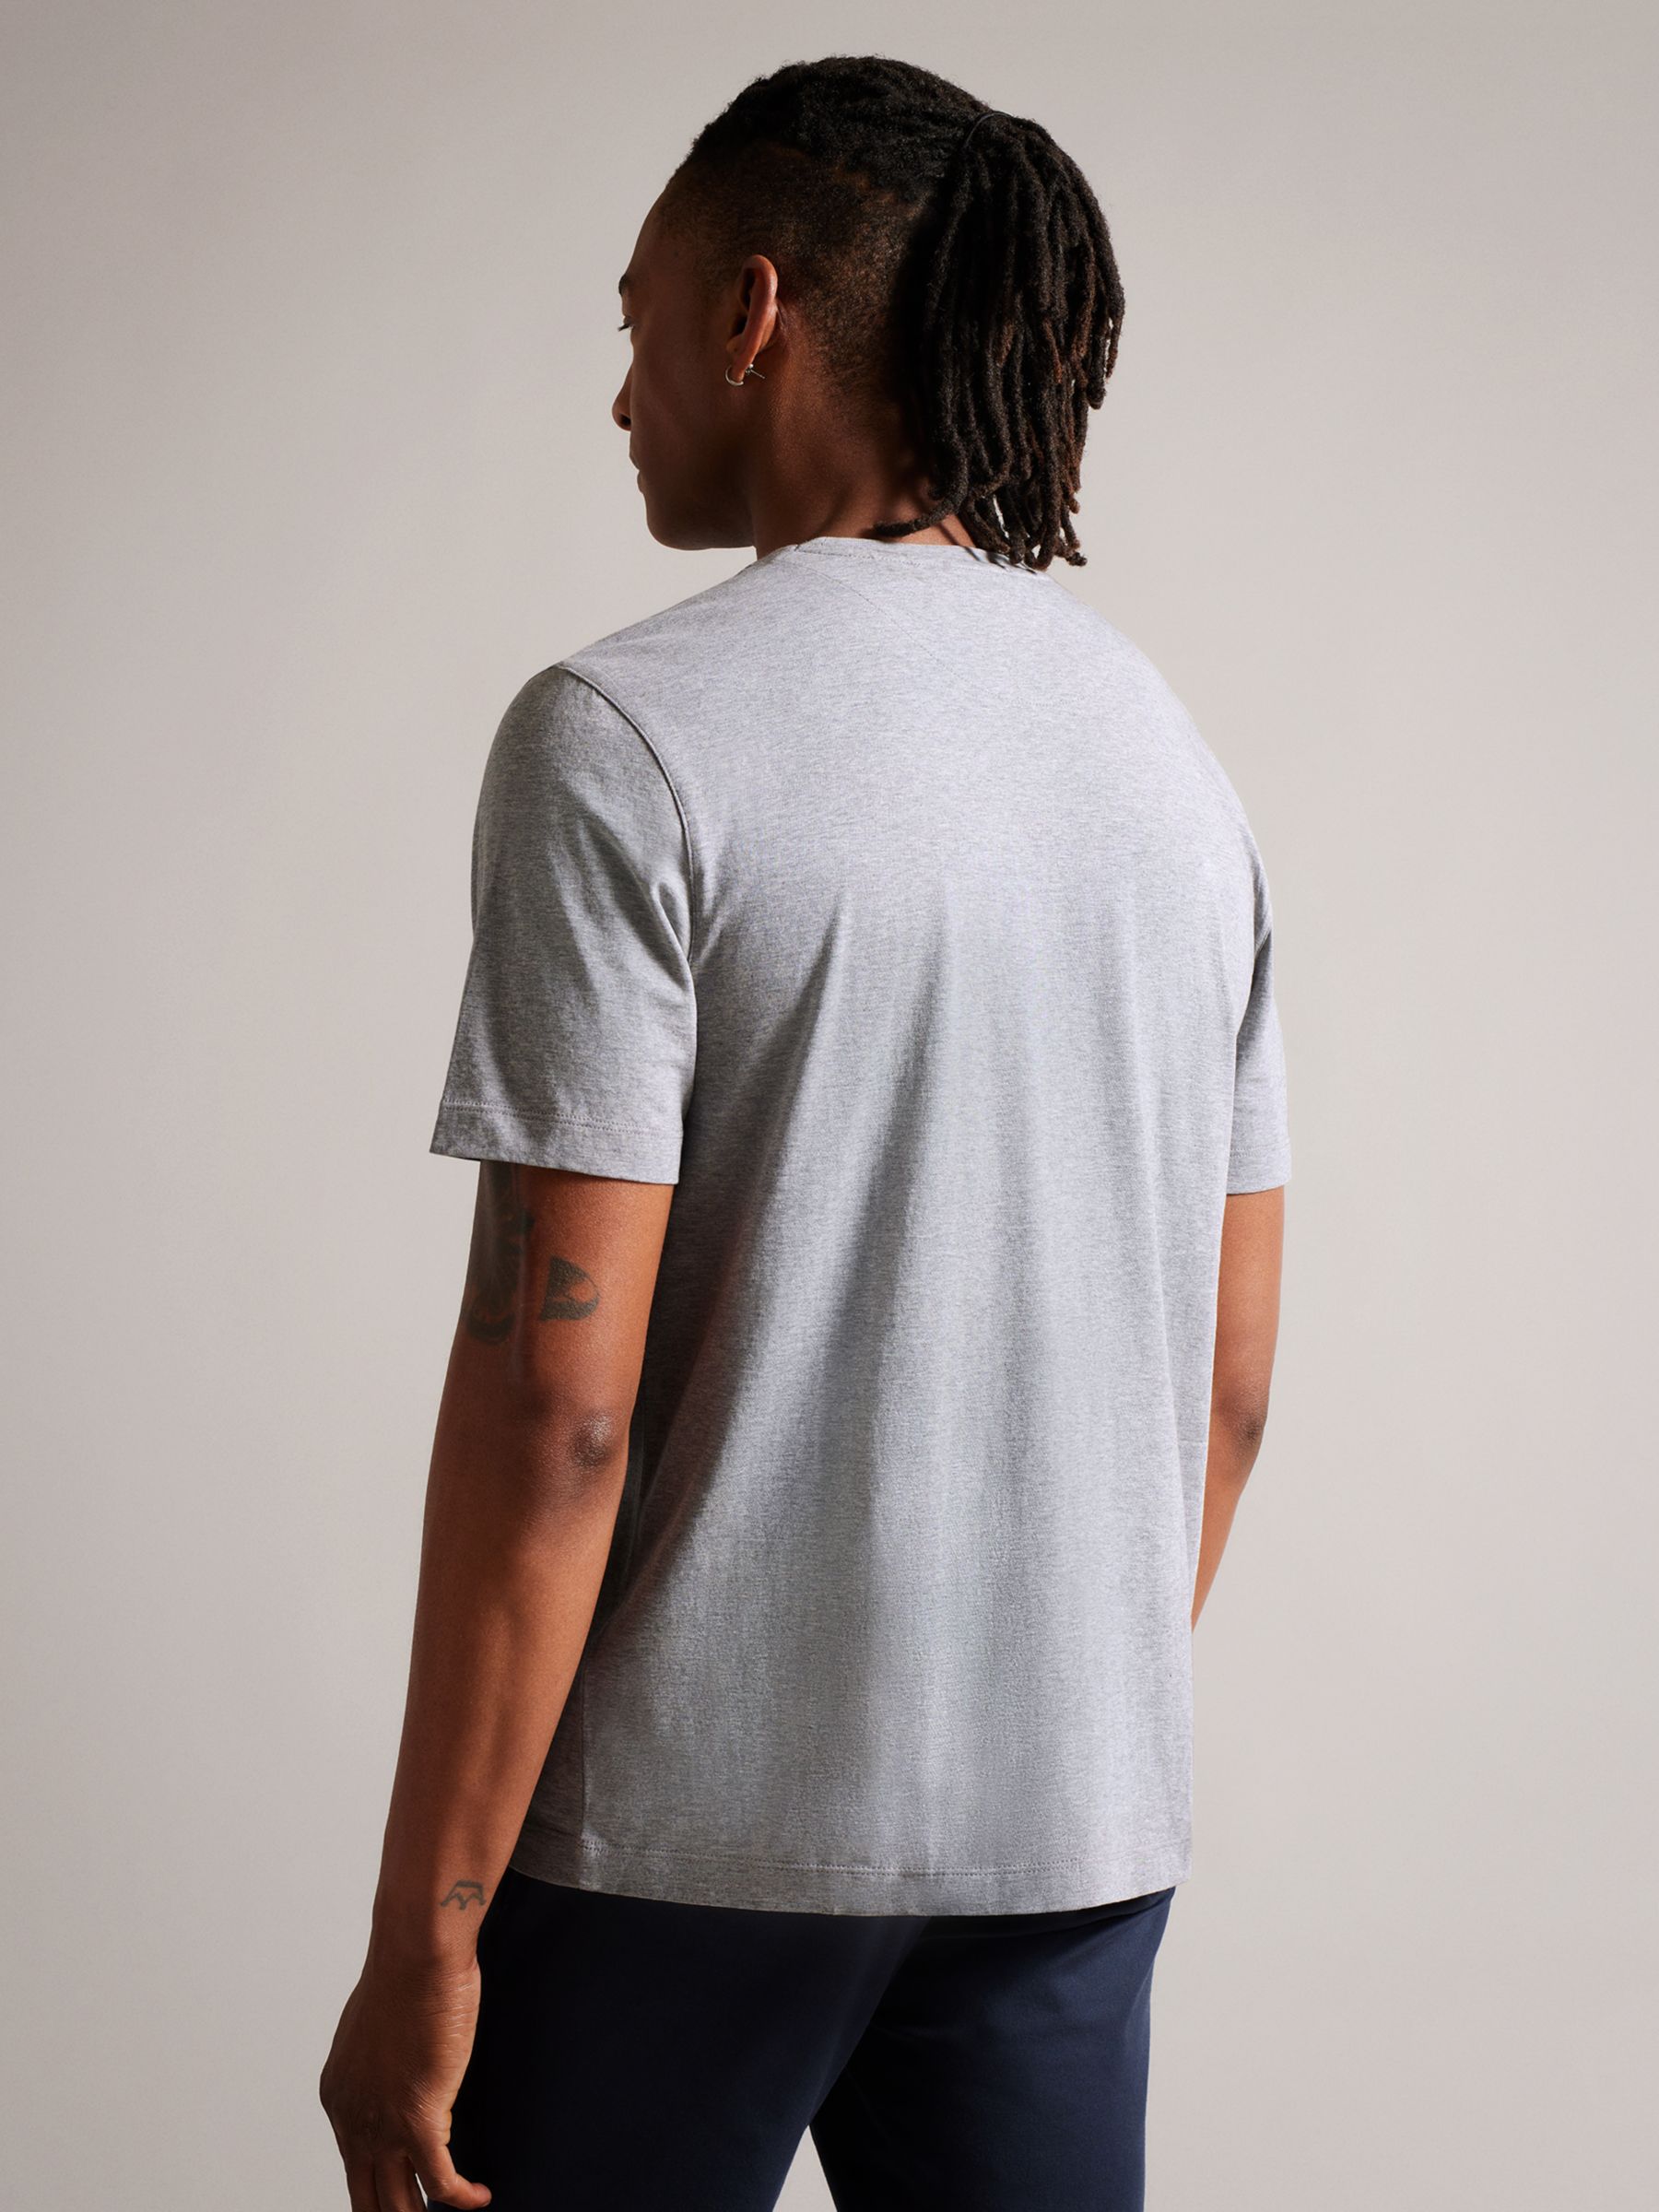 Ted Baker Tywinn Cotton T-Shirt, Grey Marl Grey, XS